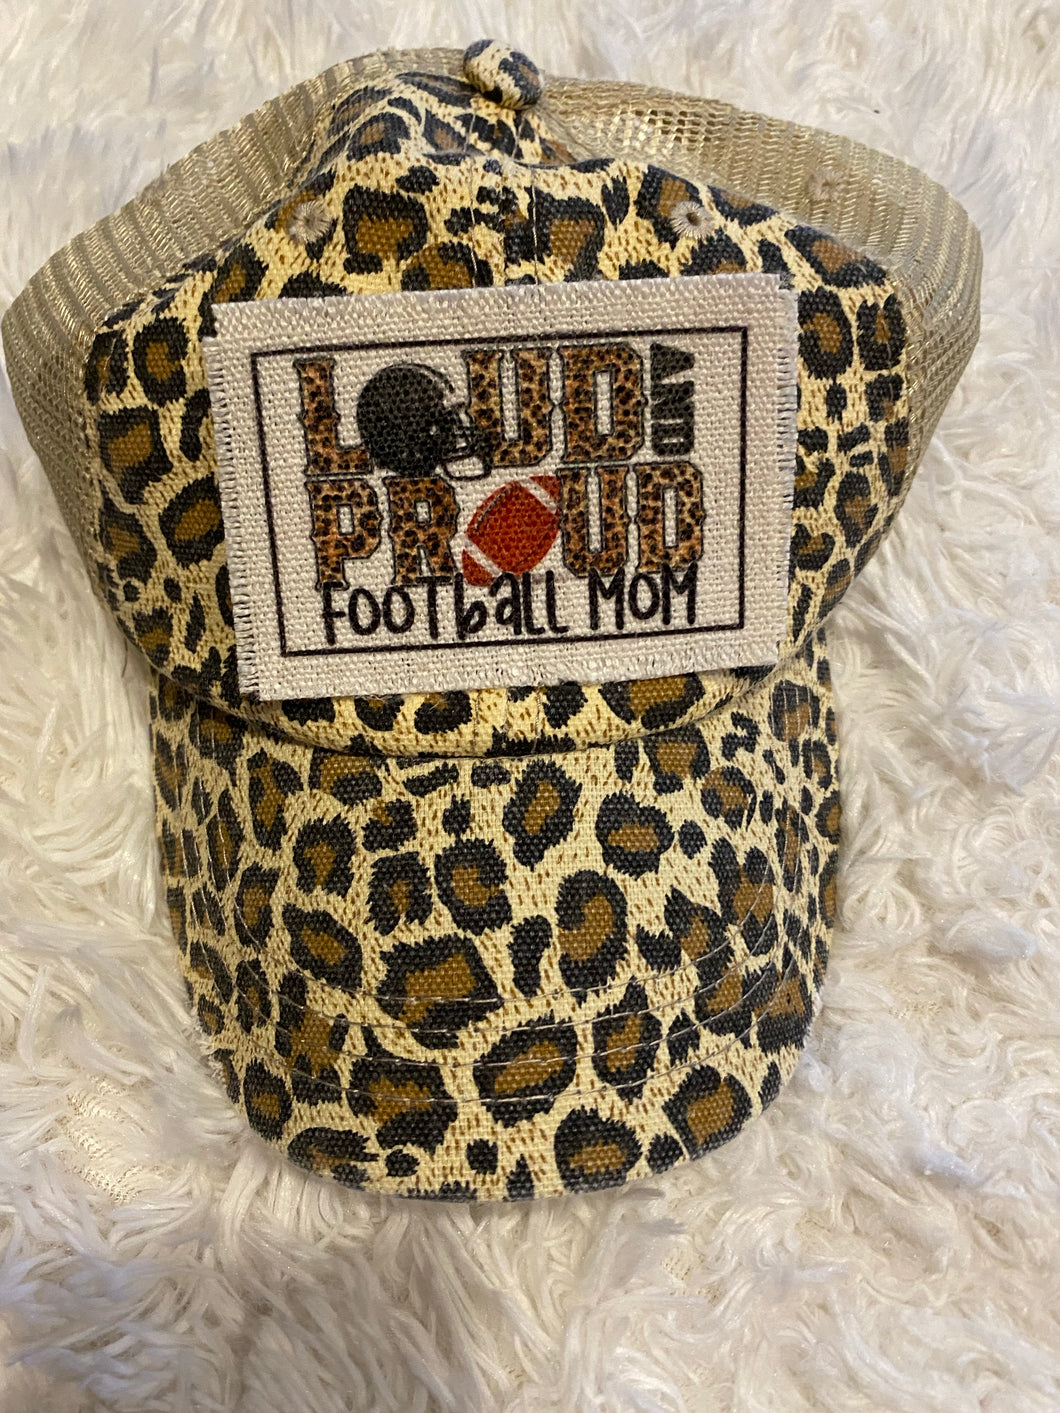 Loud & Proud Football Mom Hat